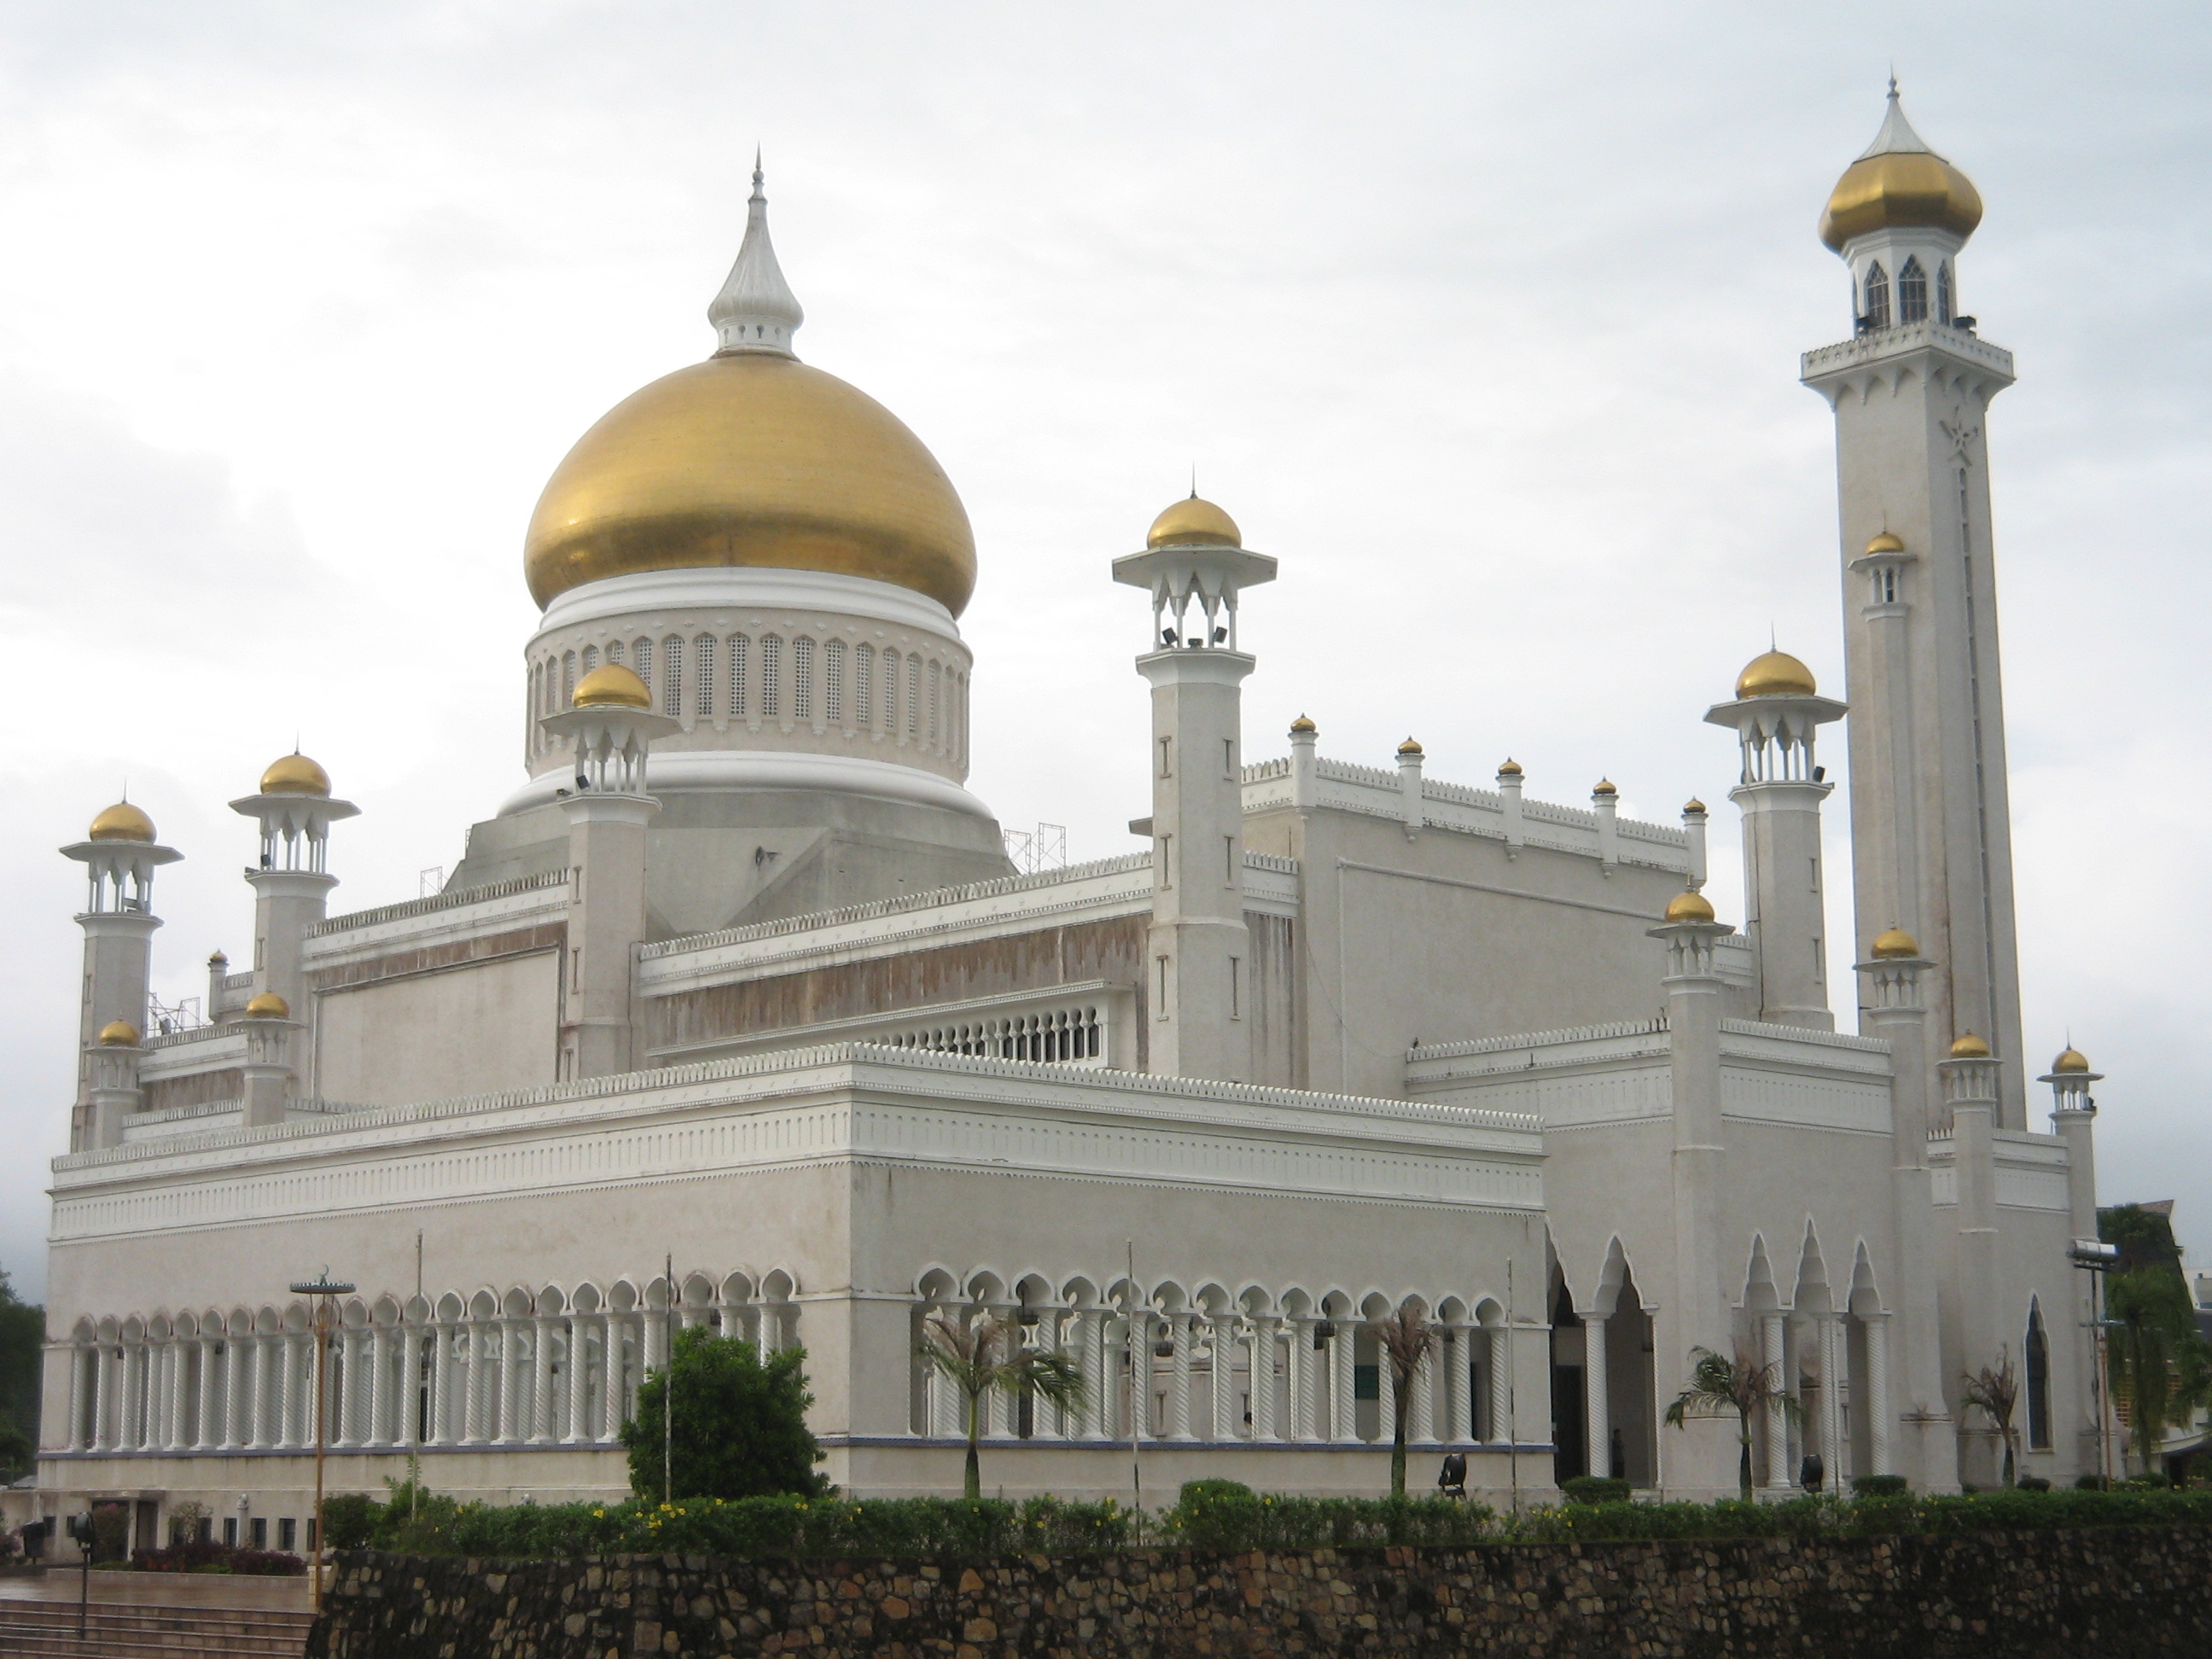 Amazing Sultan Omar Ali Saifuddin Mosque Pictures & Backgrounds